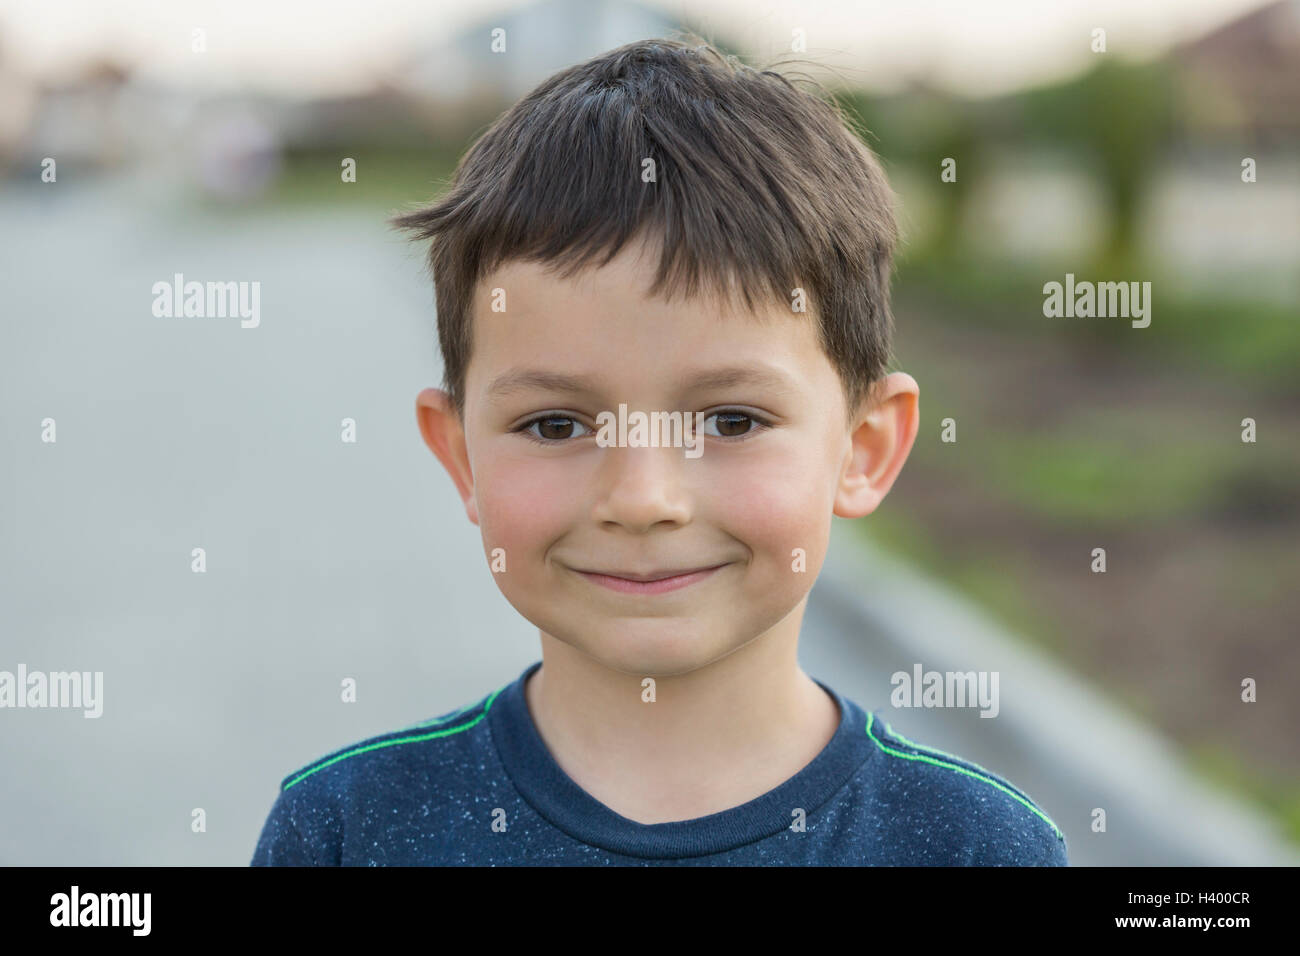 Portrait of smiling boy standing at road Banque D'Images